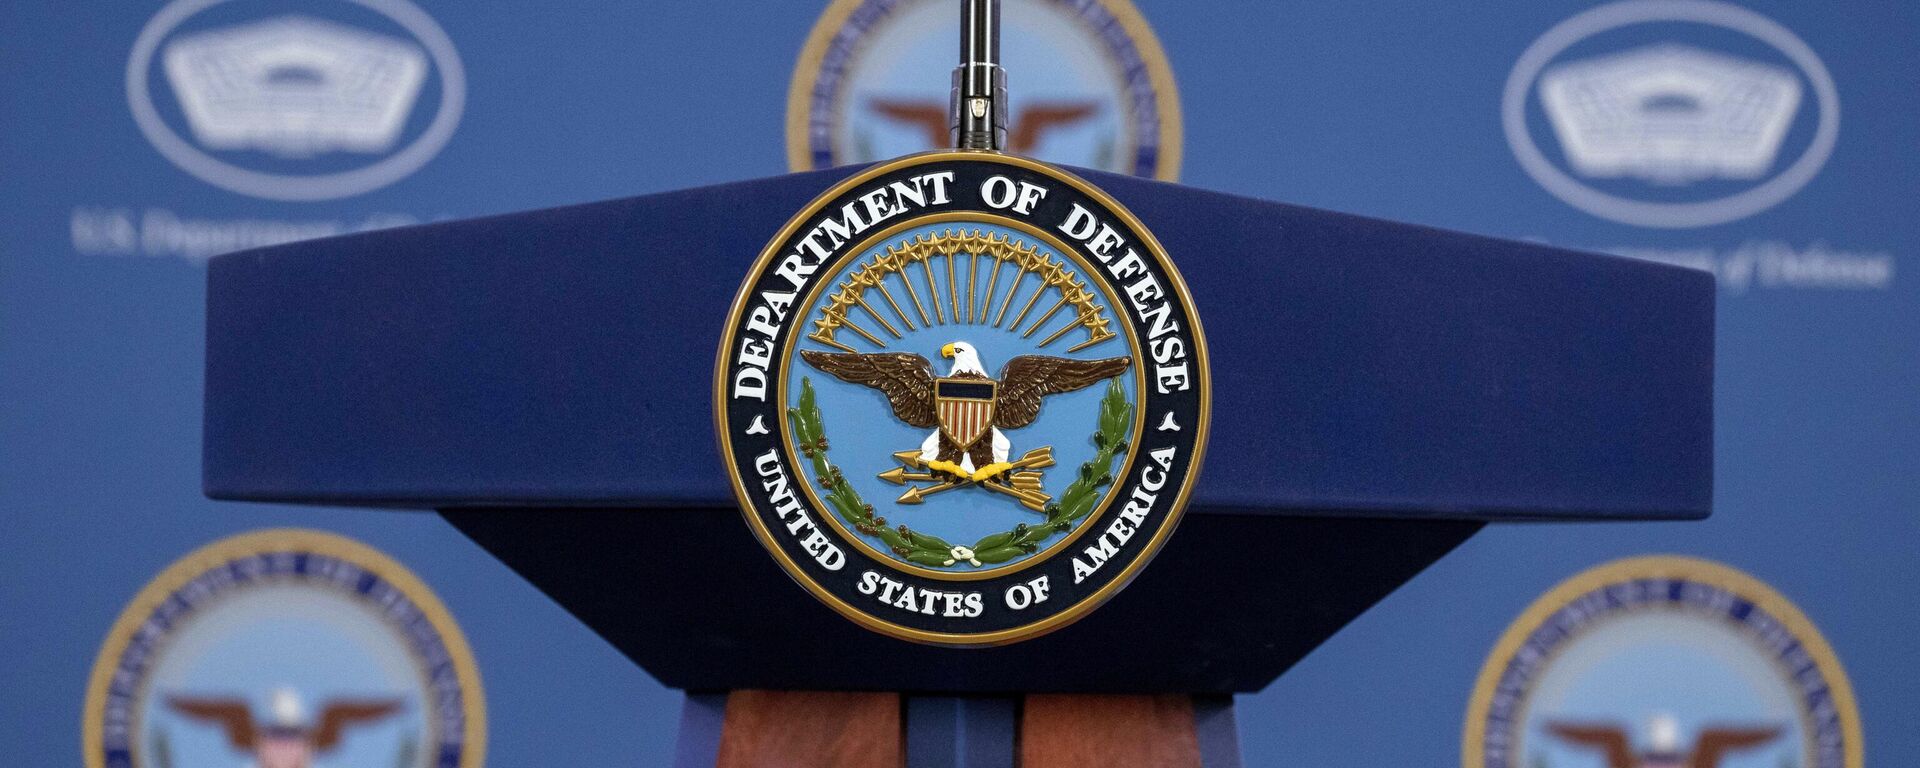 The Department of Defense Seal is seen on the podium before Pentagon spokesman U.S. Air Force Brig. Gen. Patrick Ryder speaks during a media briefing at the Pentagon, Friday, Feb. 24, 2023, in Washington. - Sputnik International, 1920, 11.11.2023